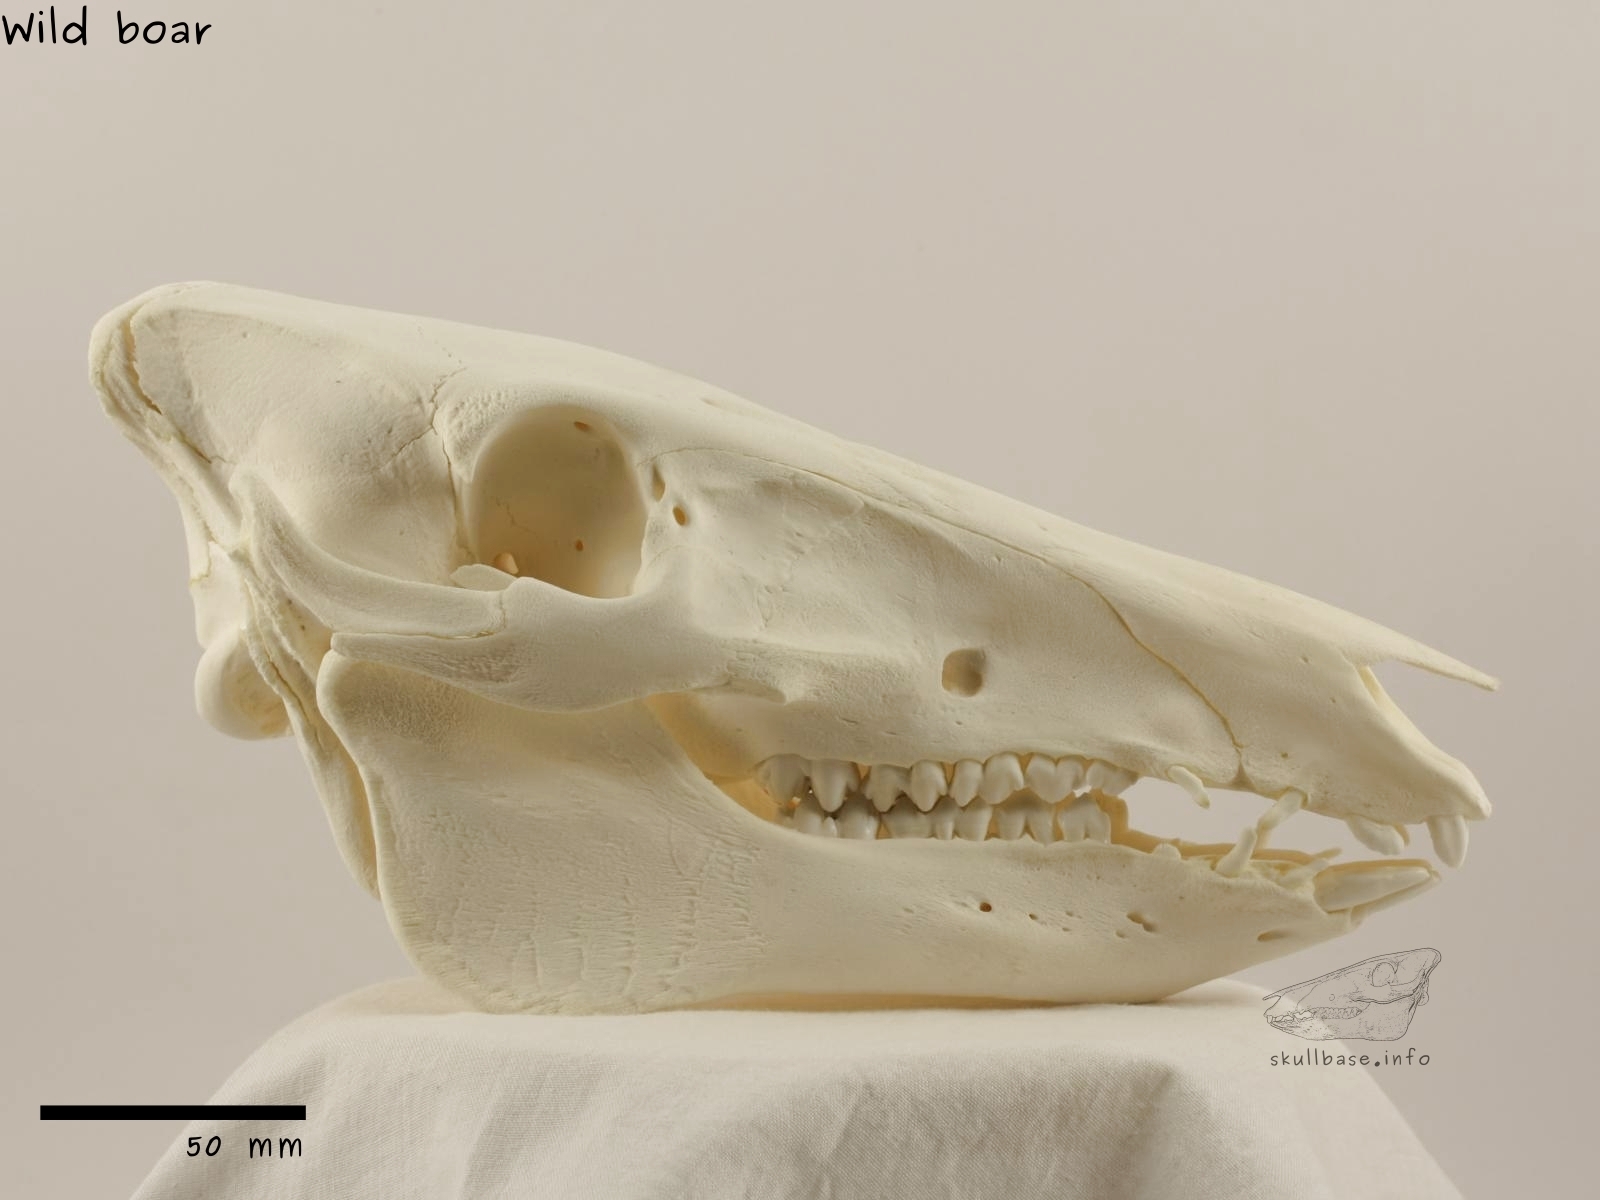 Wild boar (Sus scrofa) skull lateral view